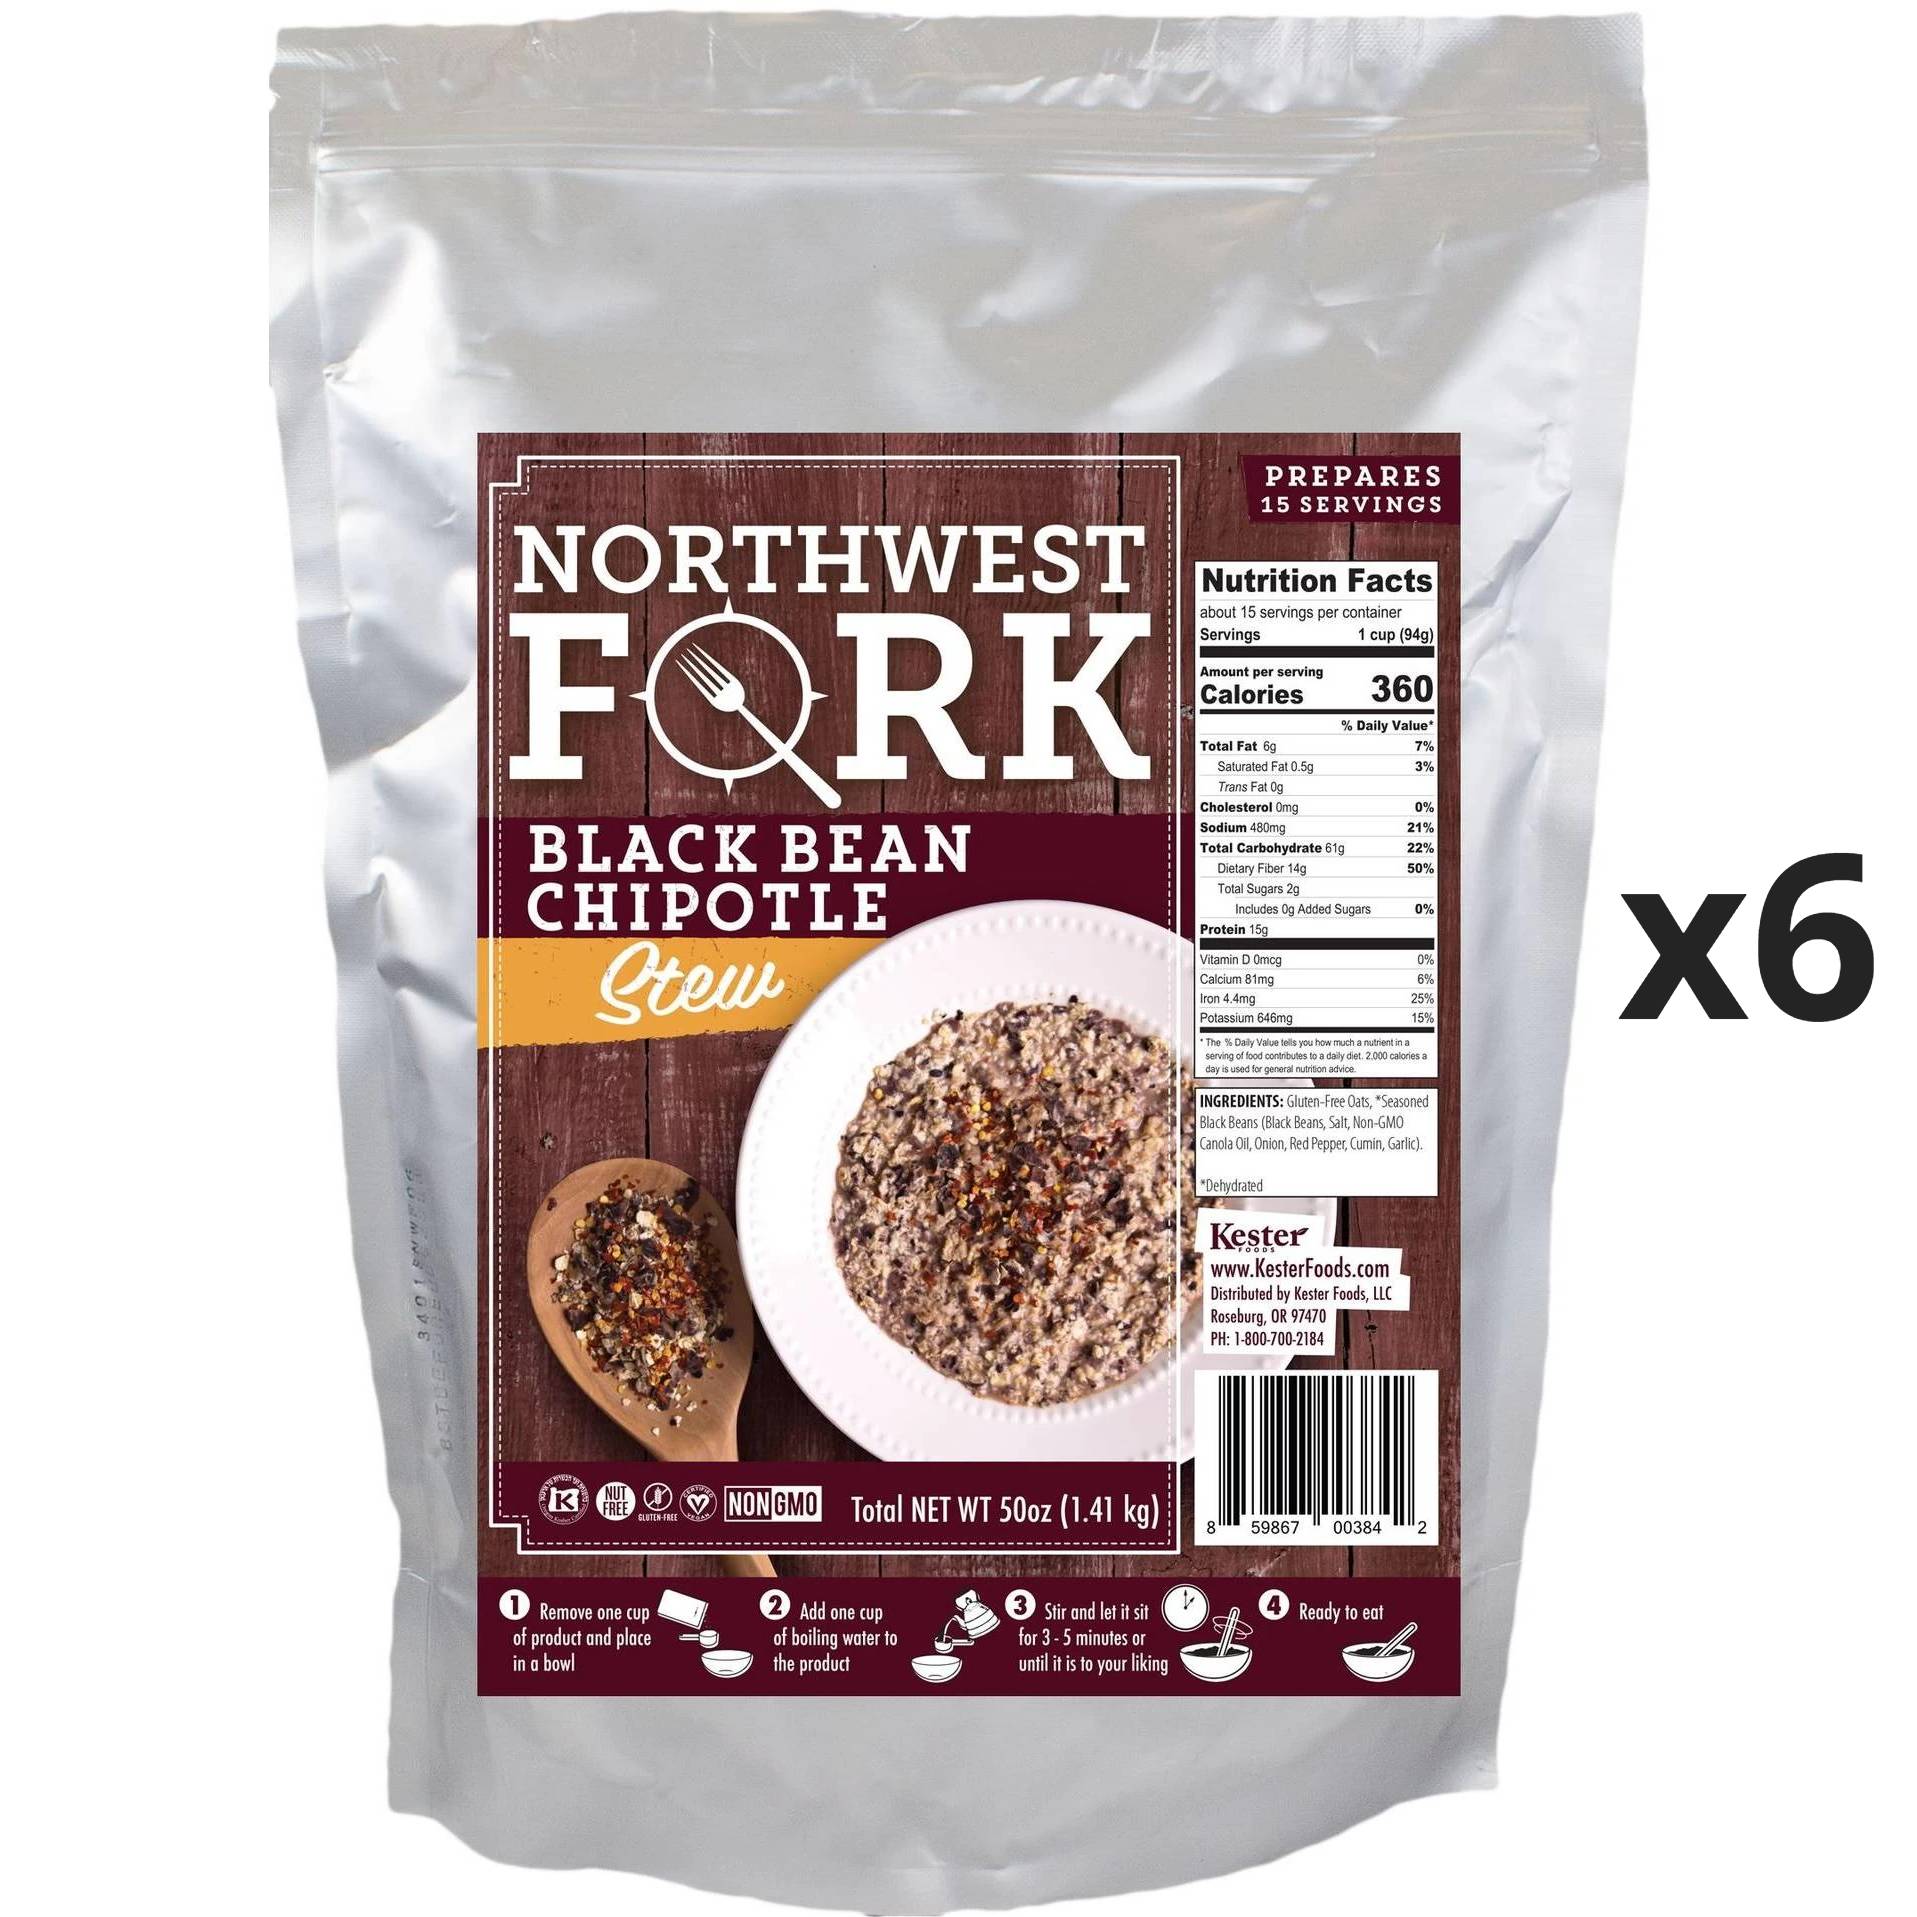 Northwest fork black bean chipotle 6 oz bag, Vegan.